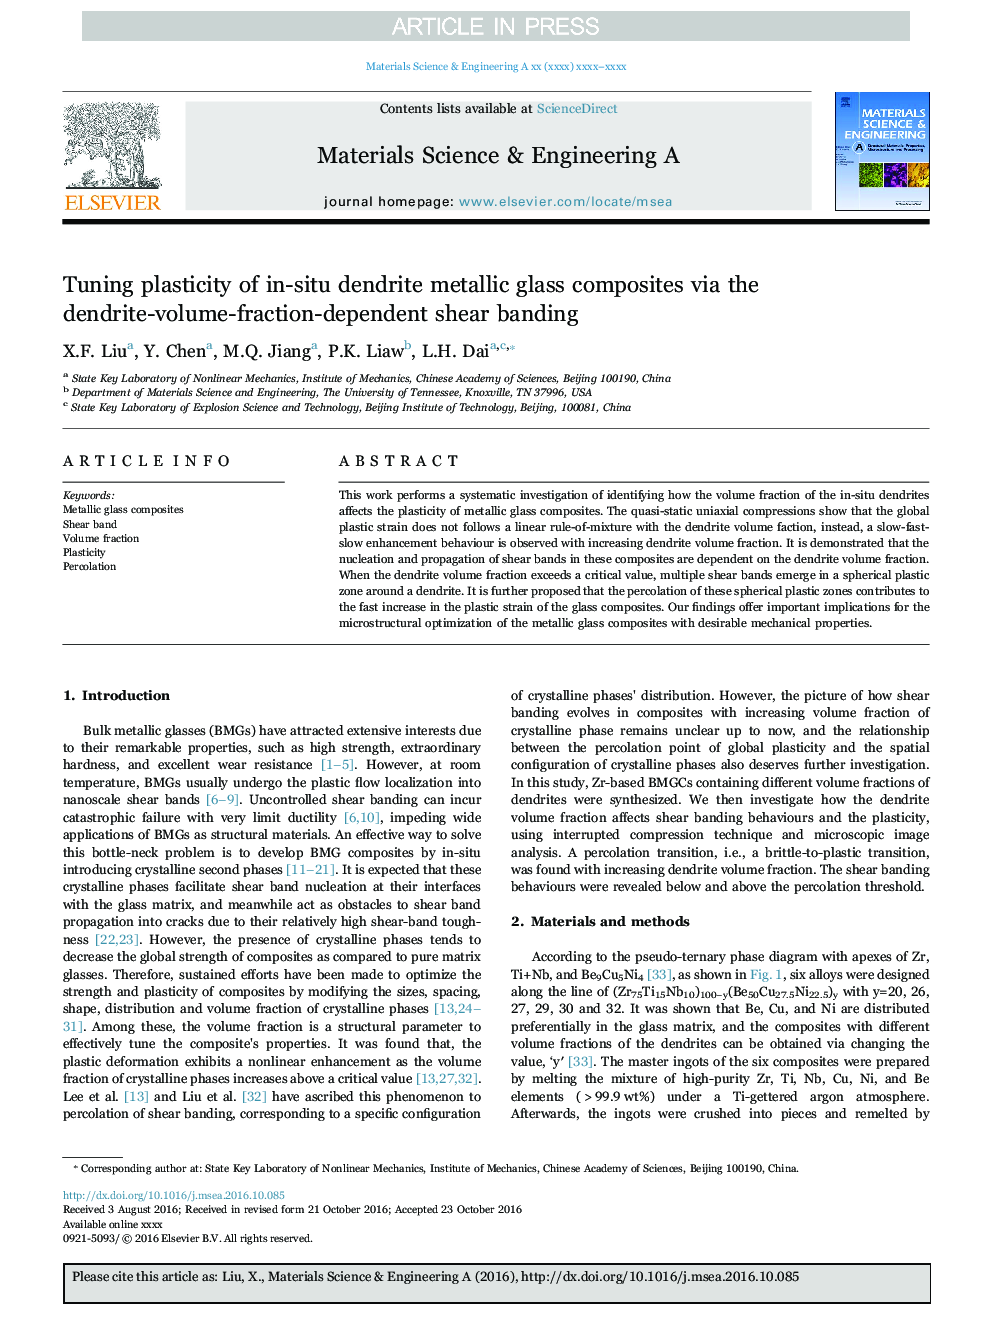 Tuning plasticity of in-situ dendrite metallic glass composites via the dendrite-volume-fraction-dependent shear banding